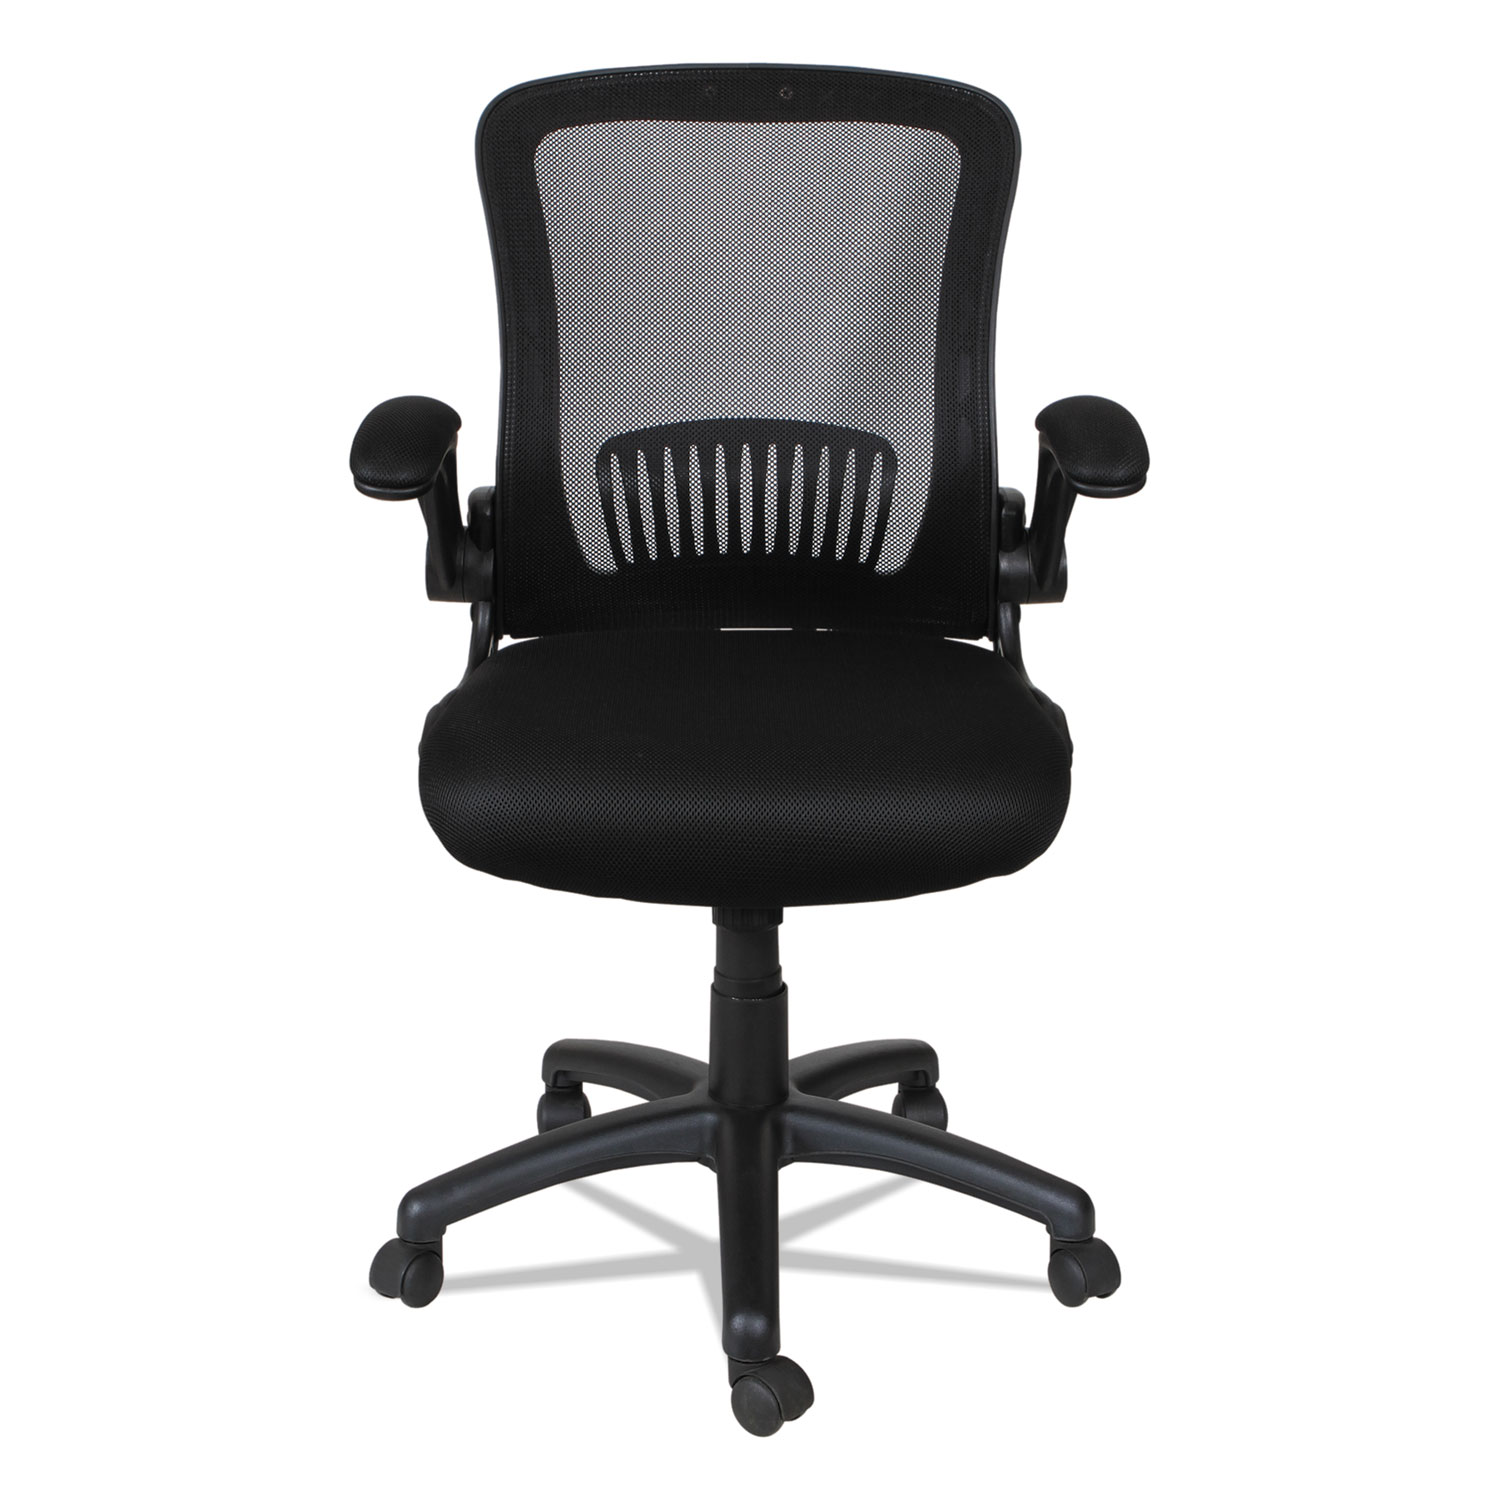 Alera EB-E Series Swivel/Tilt Mid-Back Mesh Chair, Supports up to 275 lbs., Black Seat/Black Back, Black Base